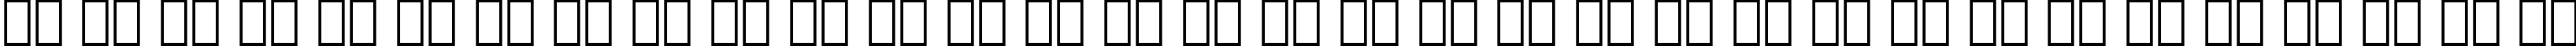 Пример написания русского алфавита шрифтом Humanist 777 Bold Italic BT